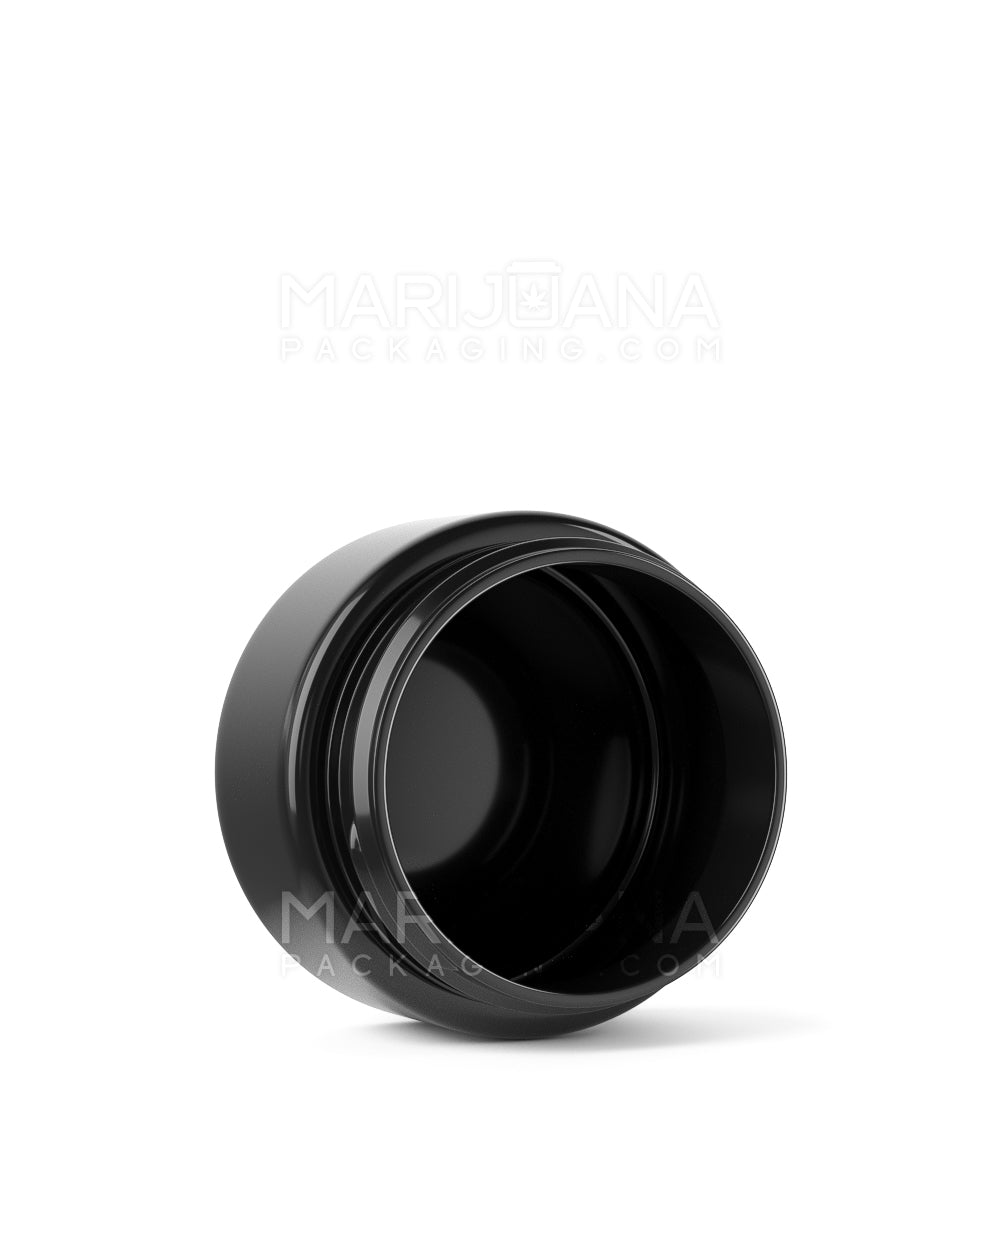 Straight Sided Black Plastic Jars | 53mm - 2oz - 200 Count - 3